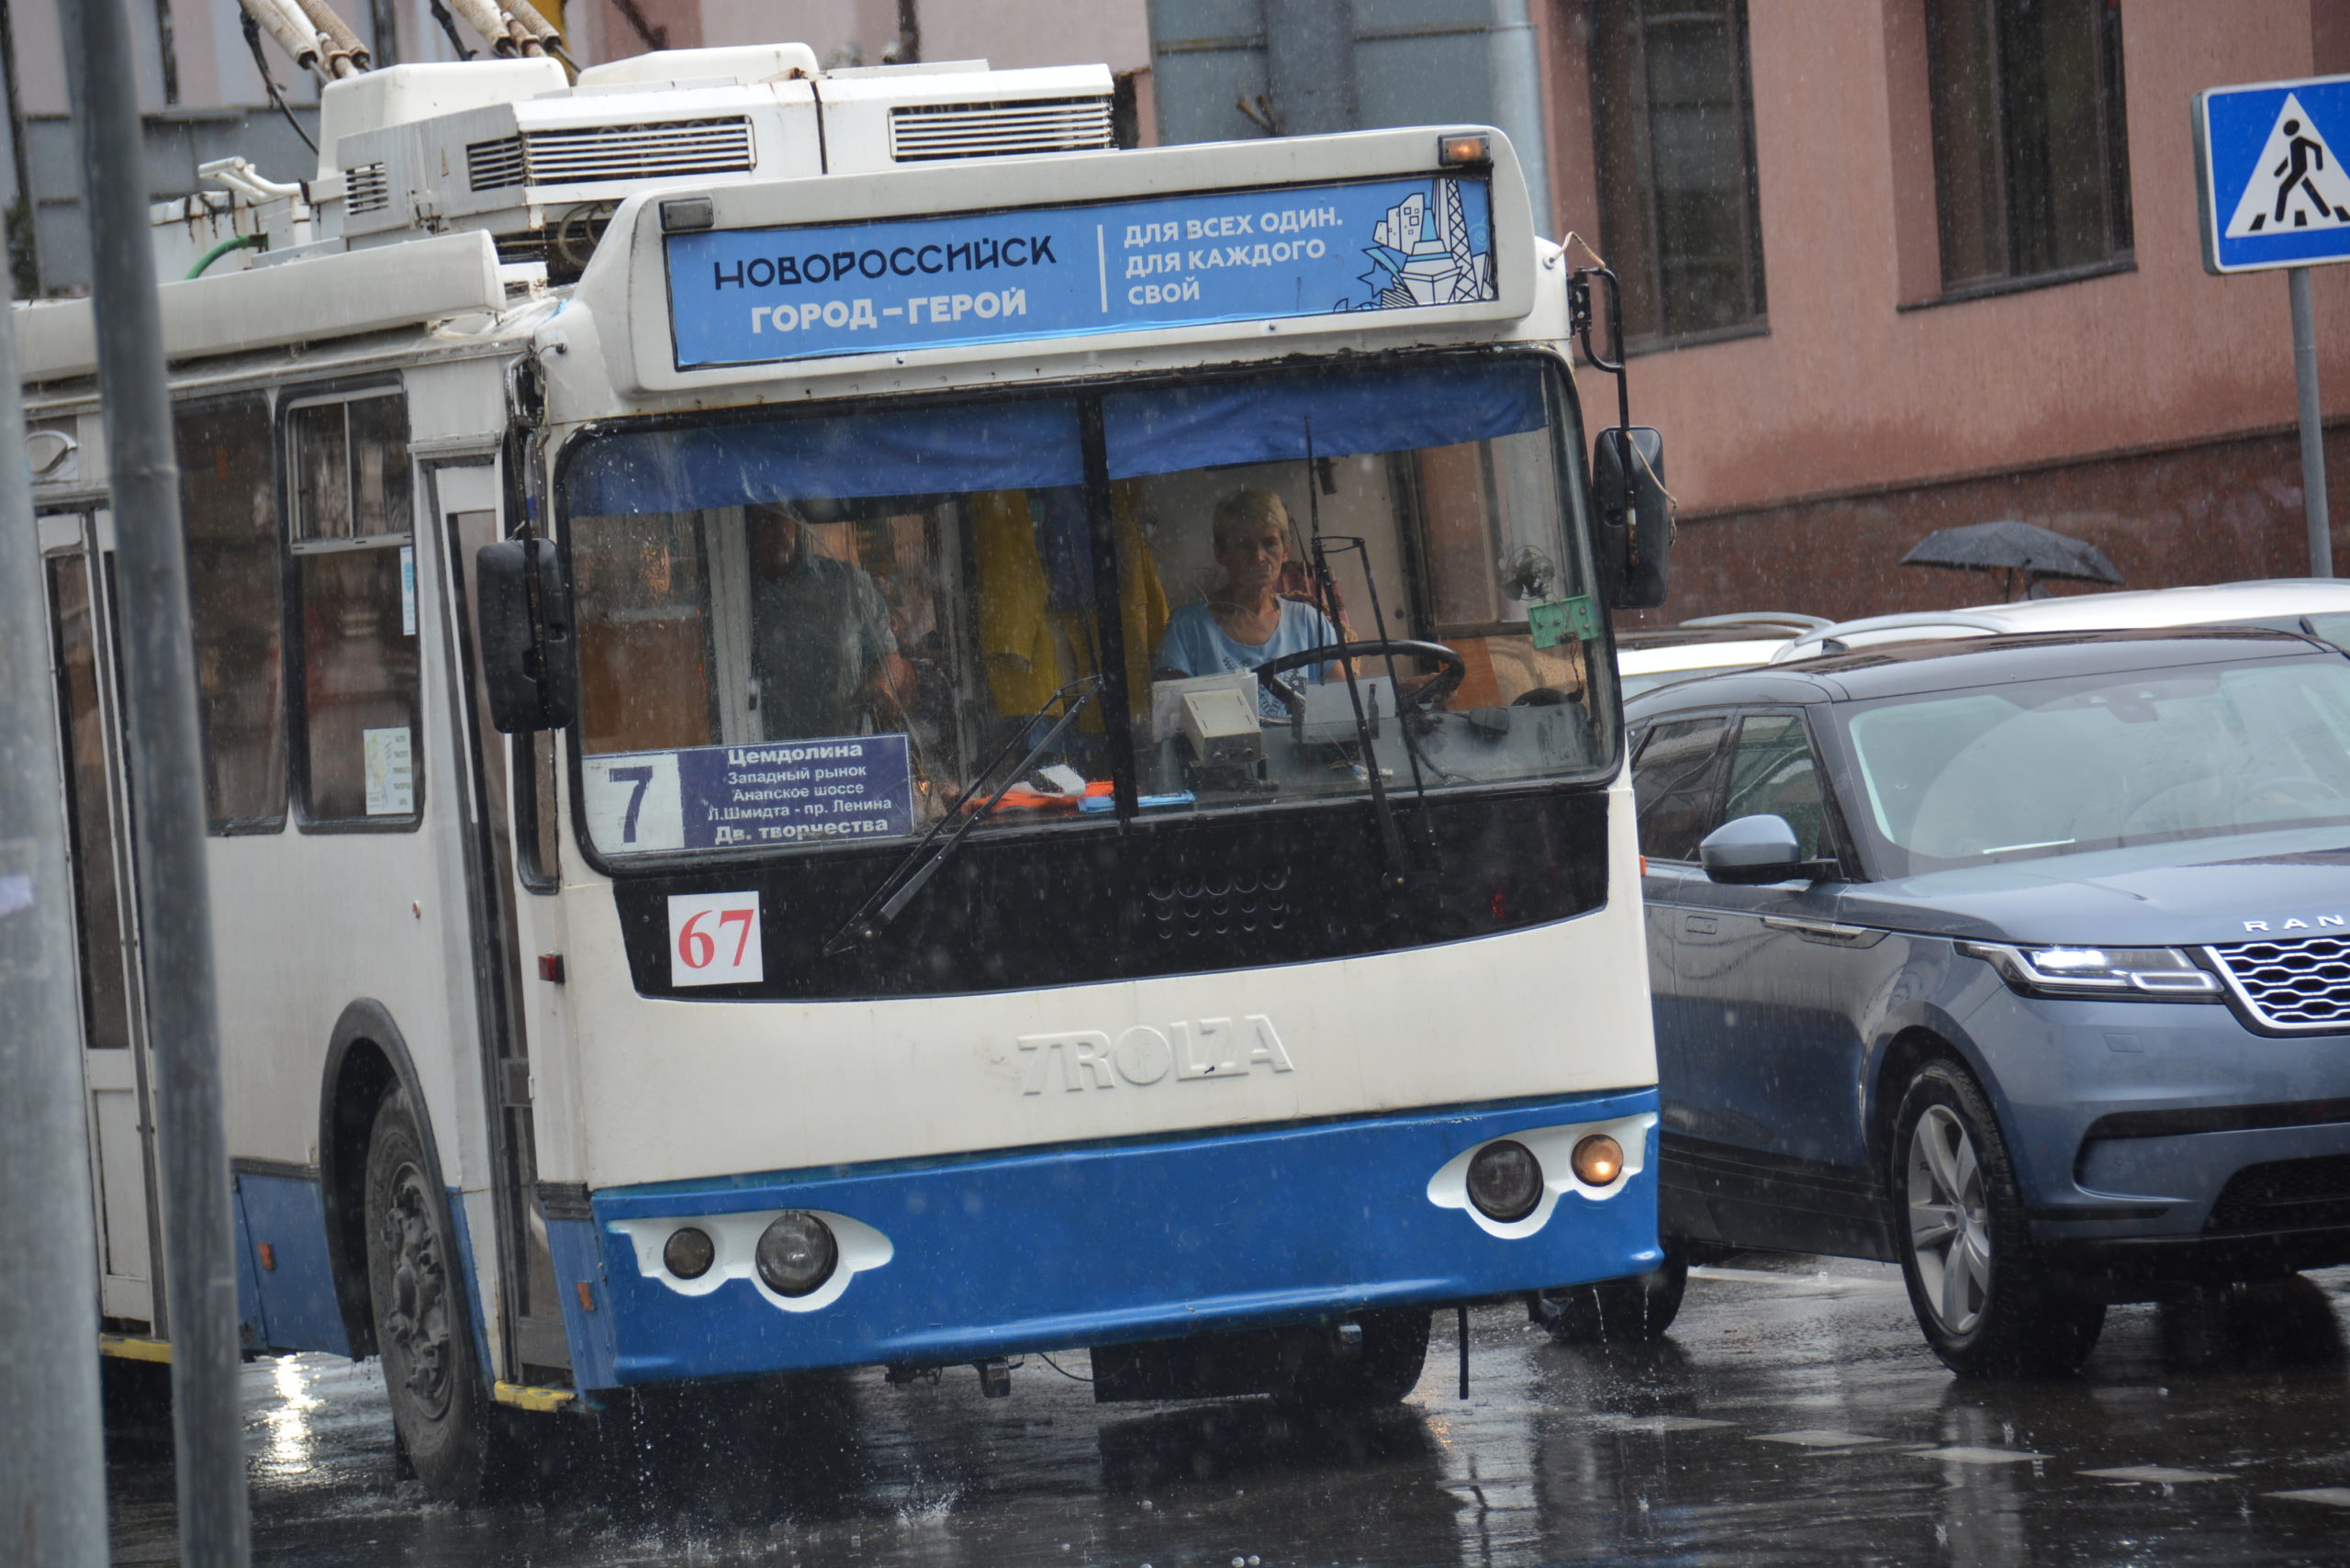 Новороссийский троллейбус запустили по новому маршруту